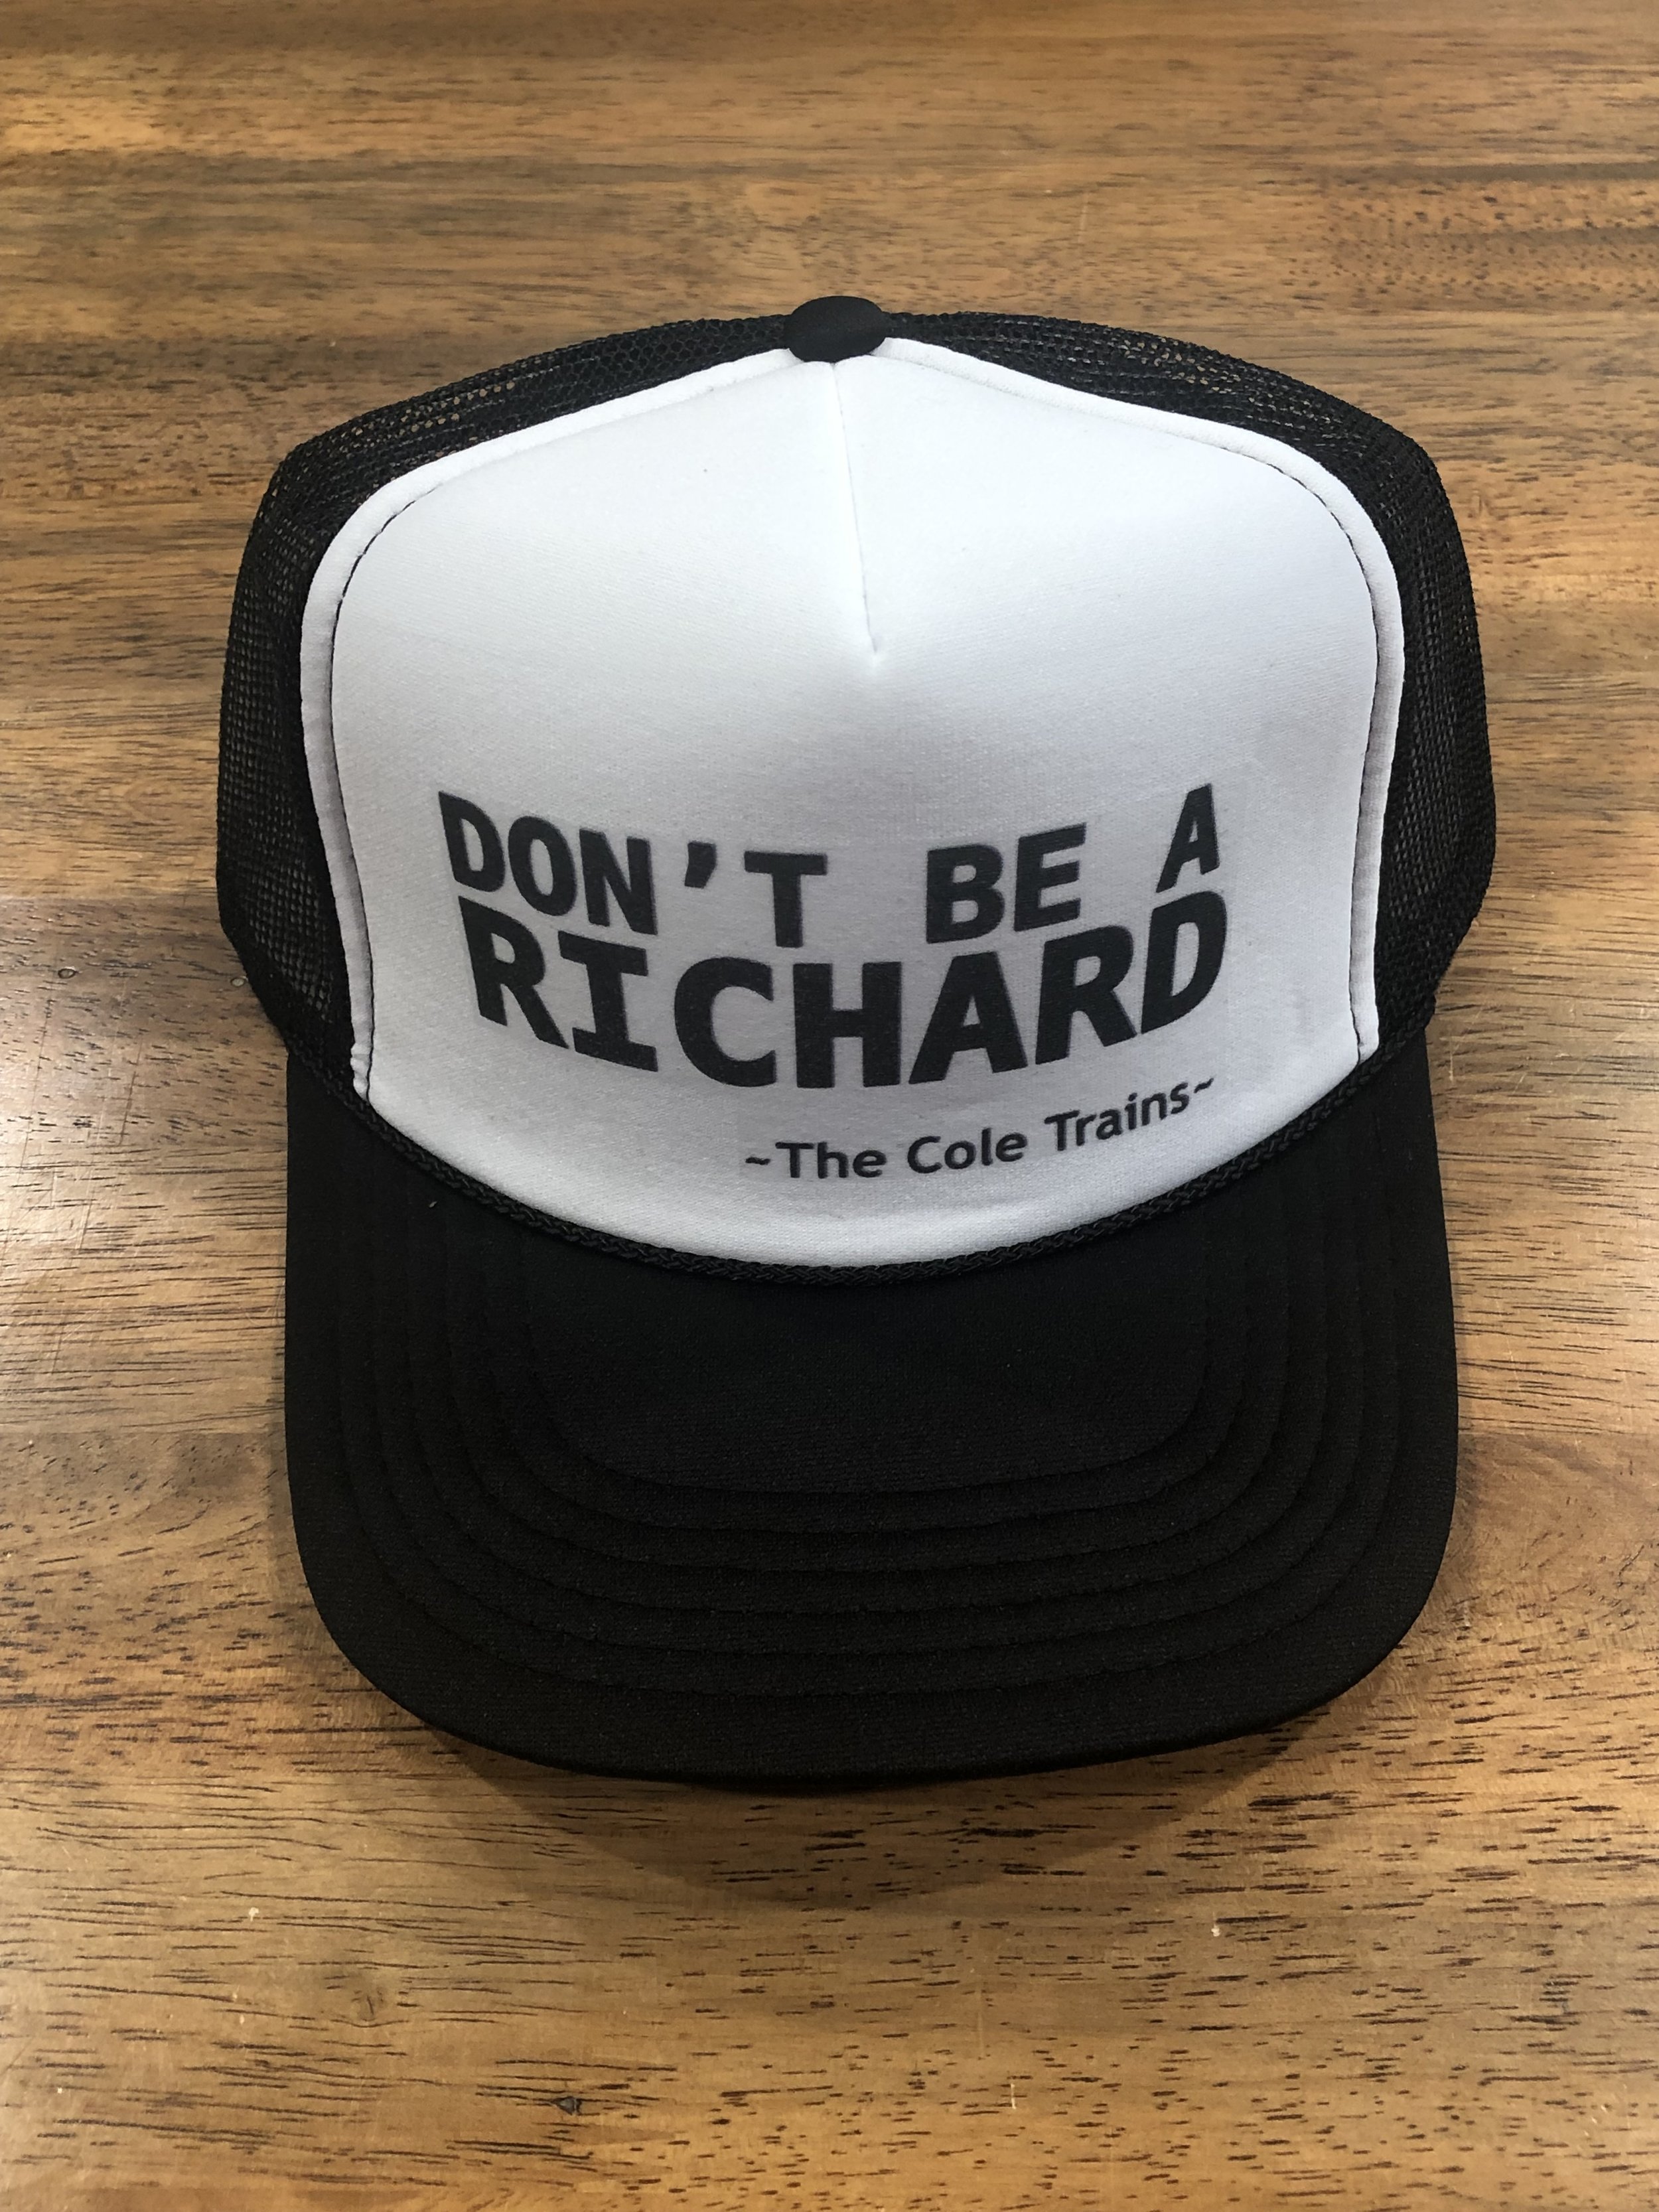 richard hat